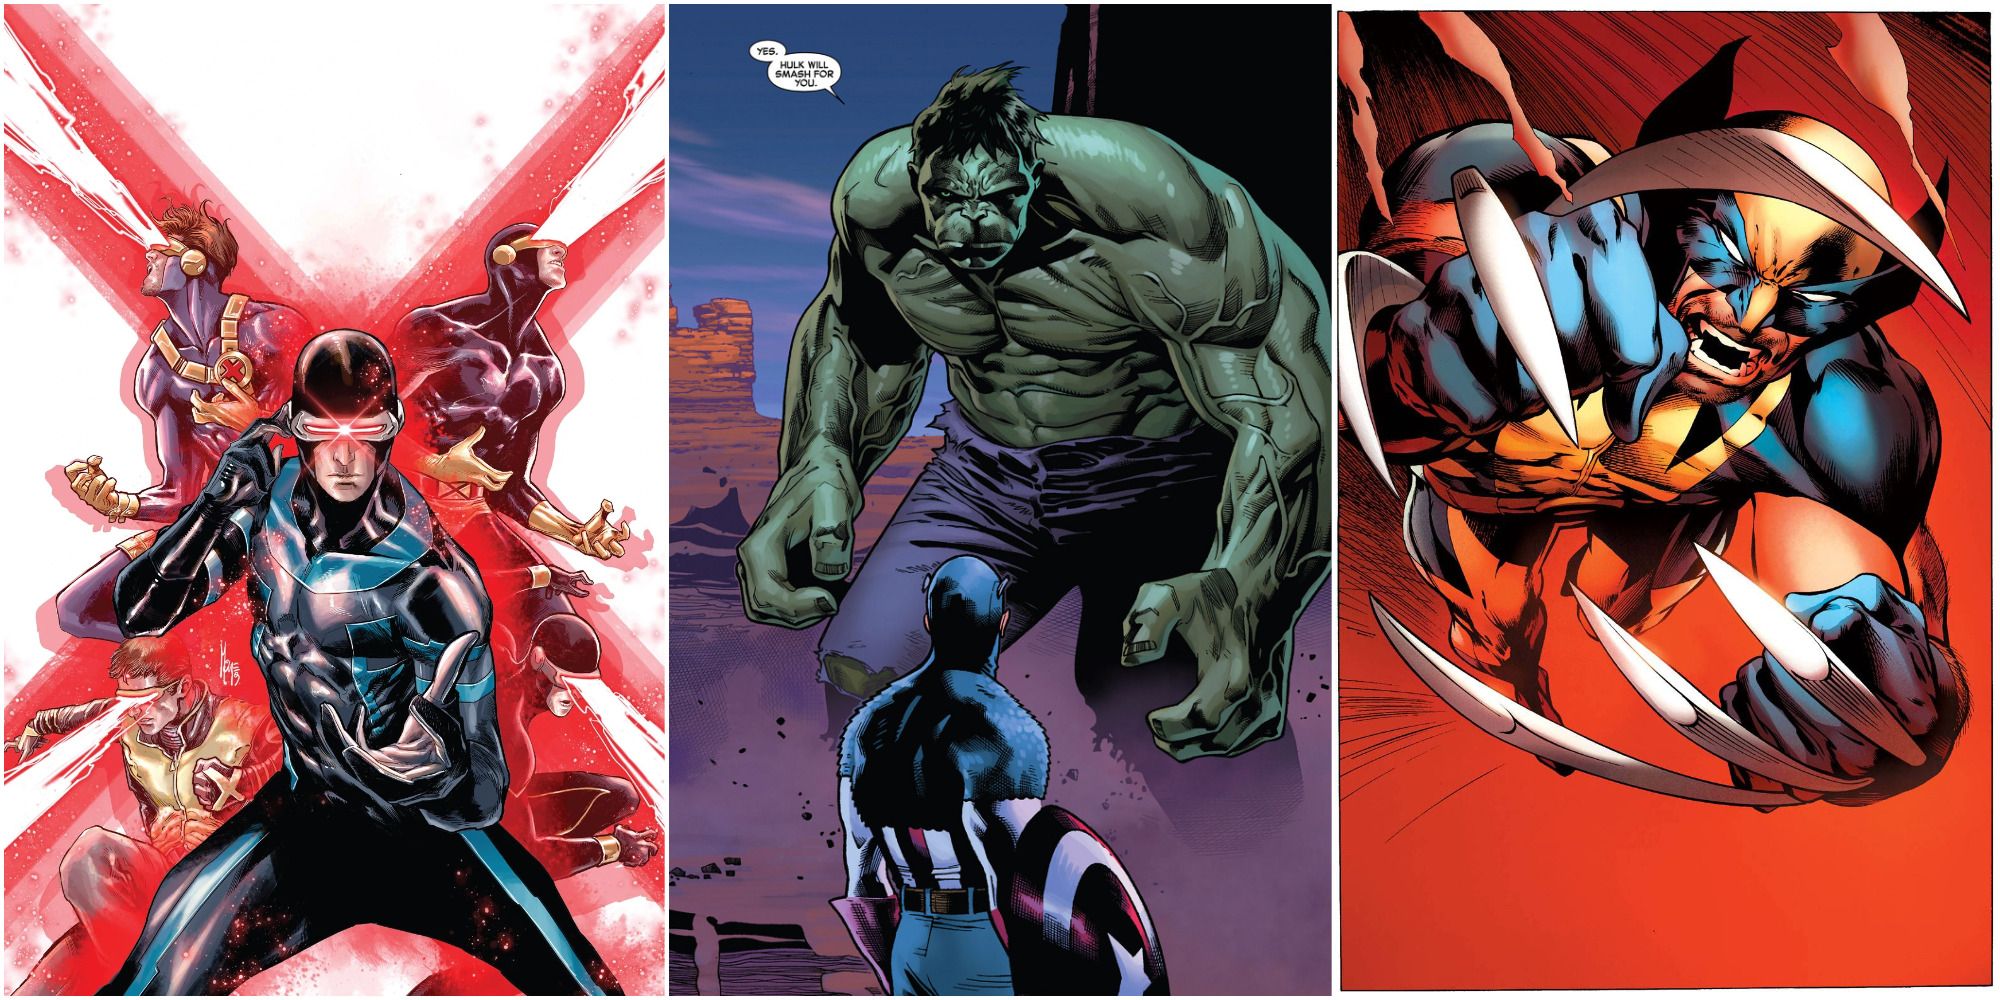 Cyclops, Hulk, and Wolverine